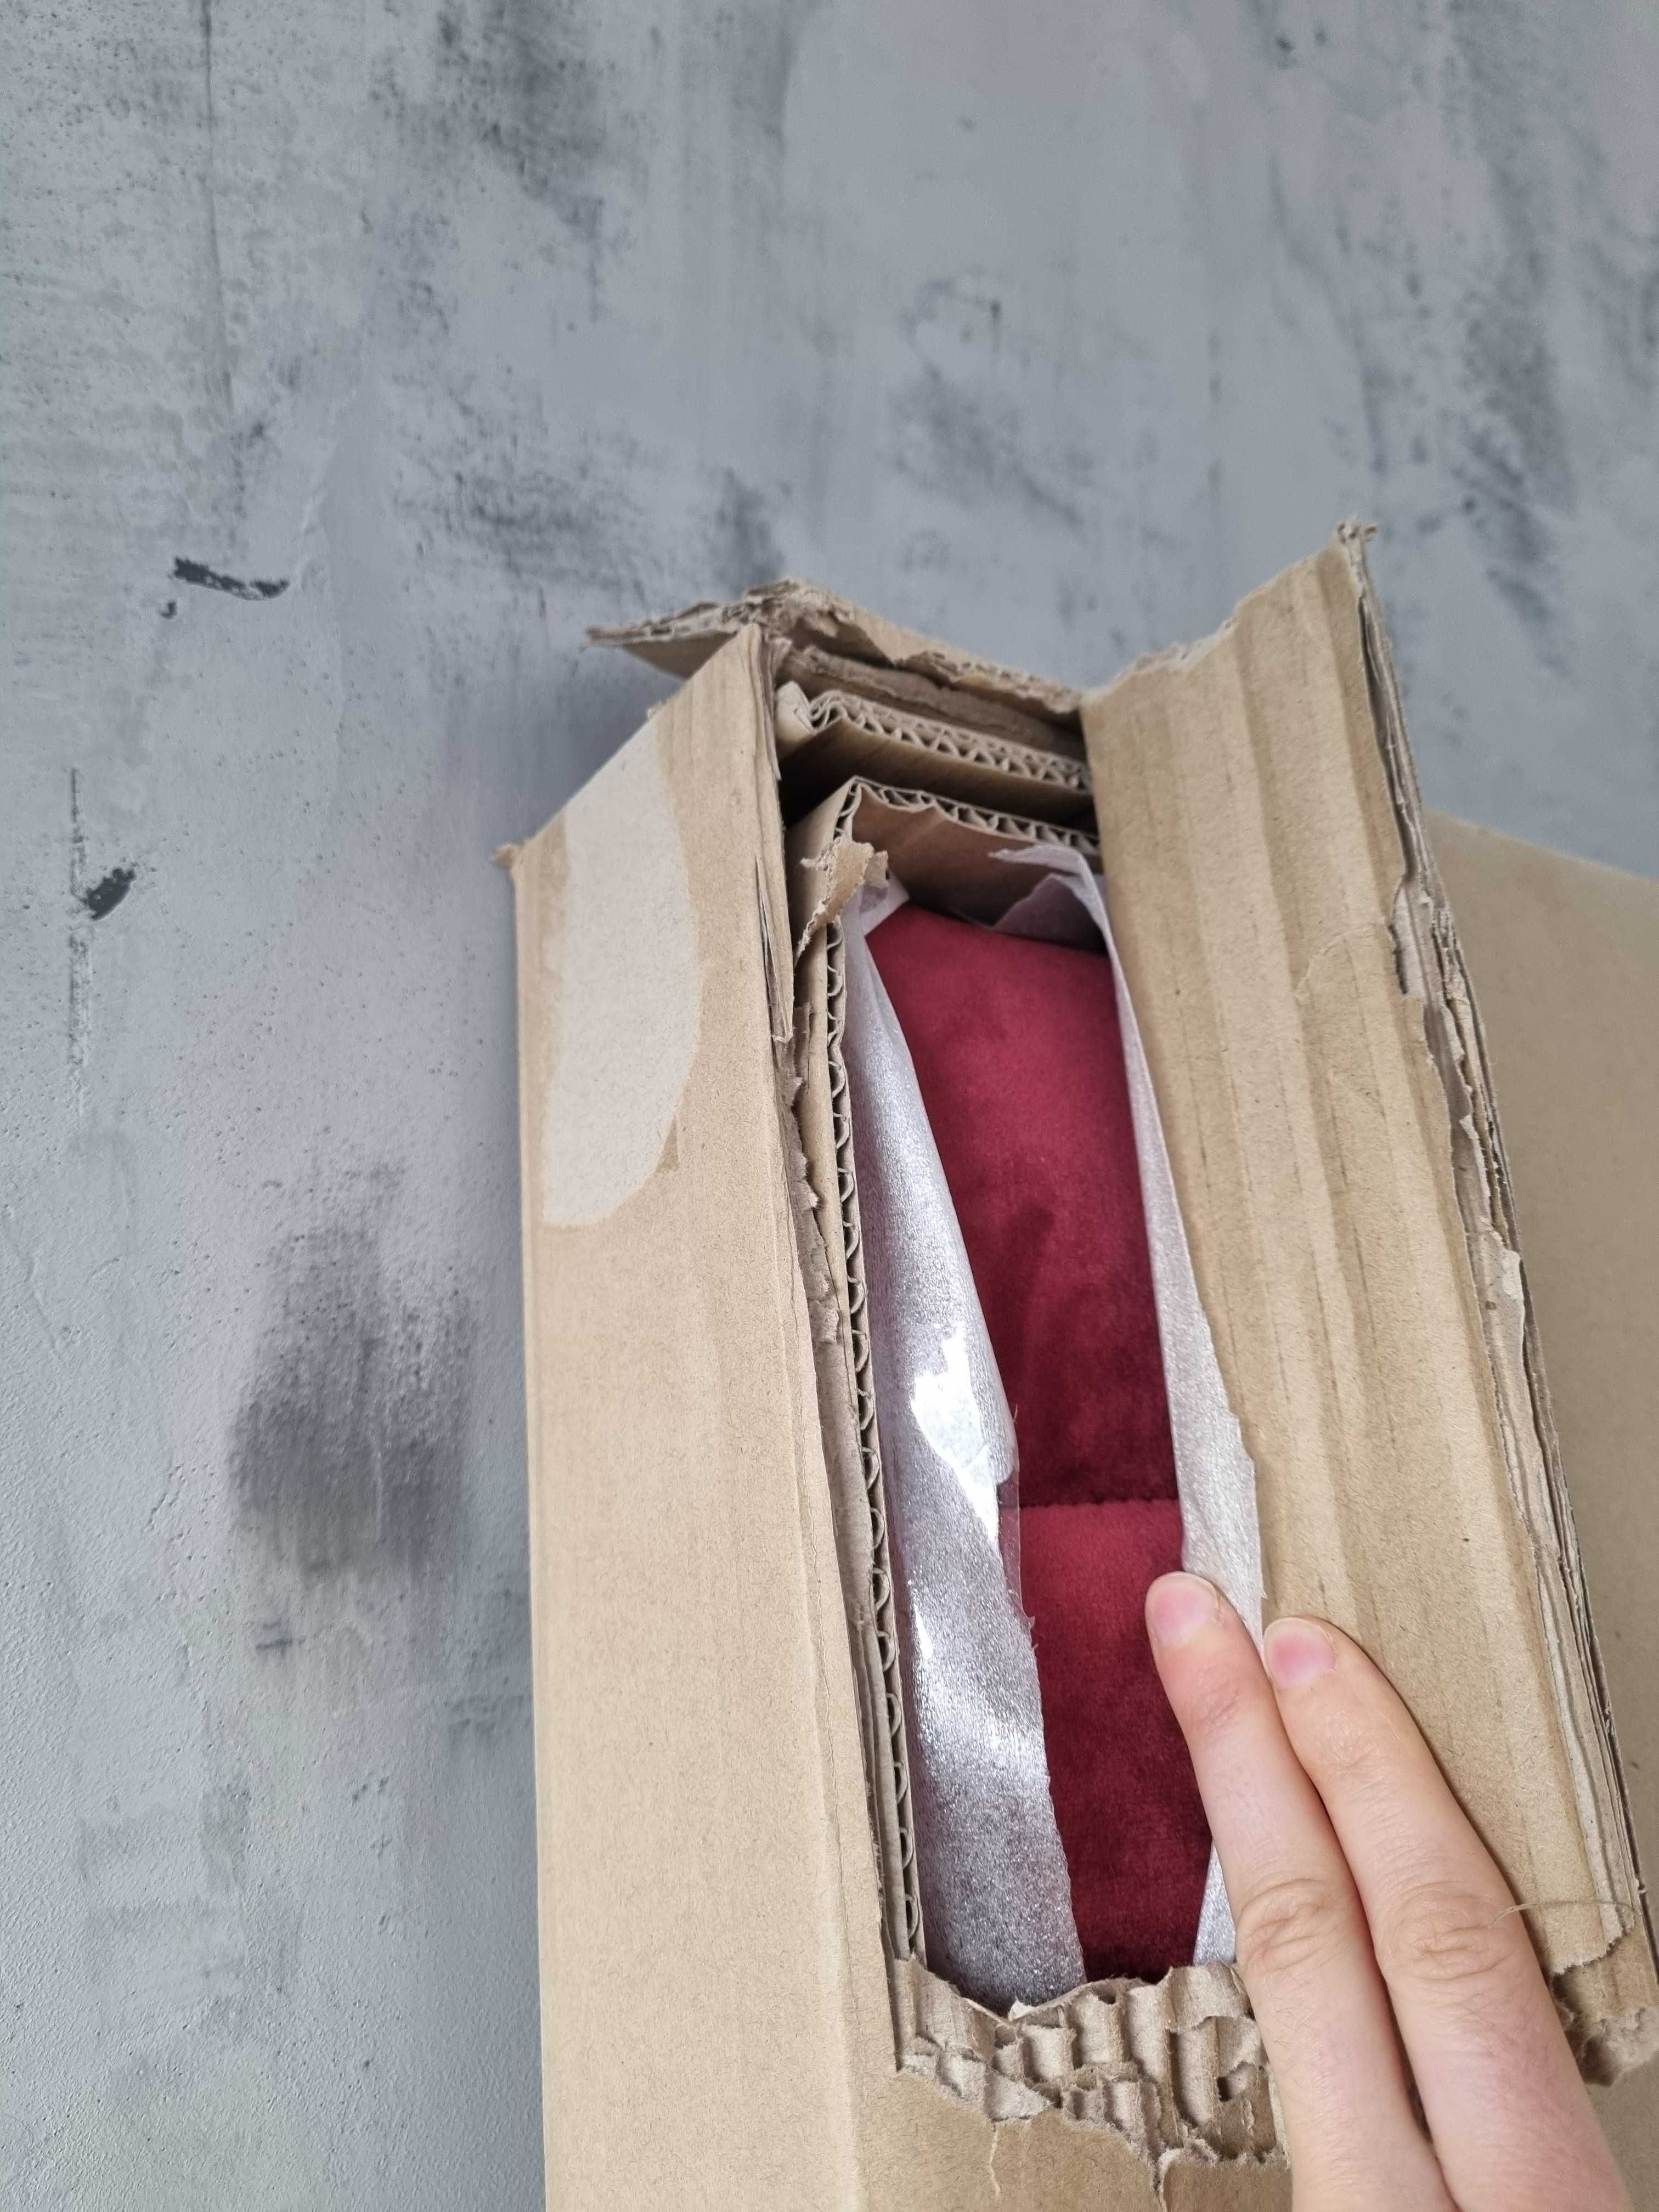 Pat tapitat stofa Cydney Velvet Burgundy, Somproduct, 200x160cm